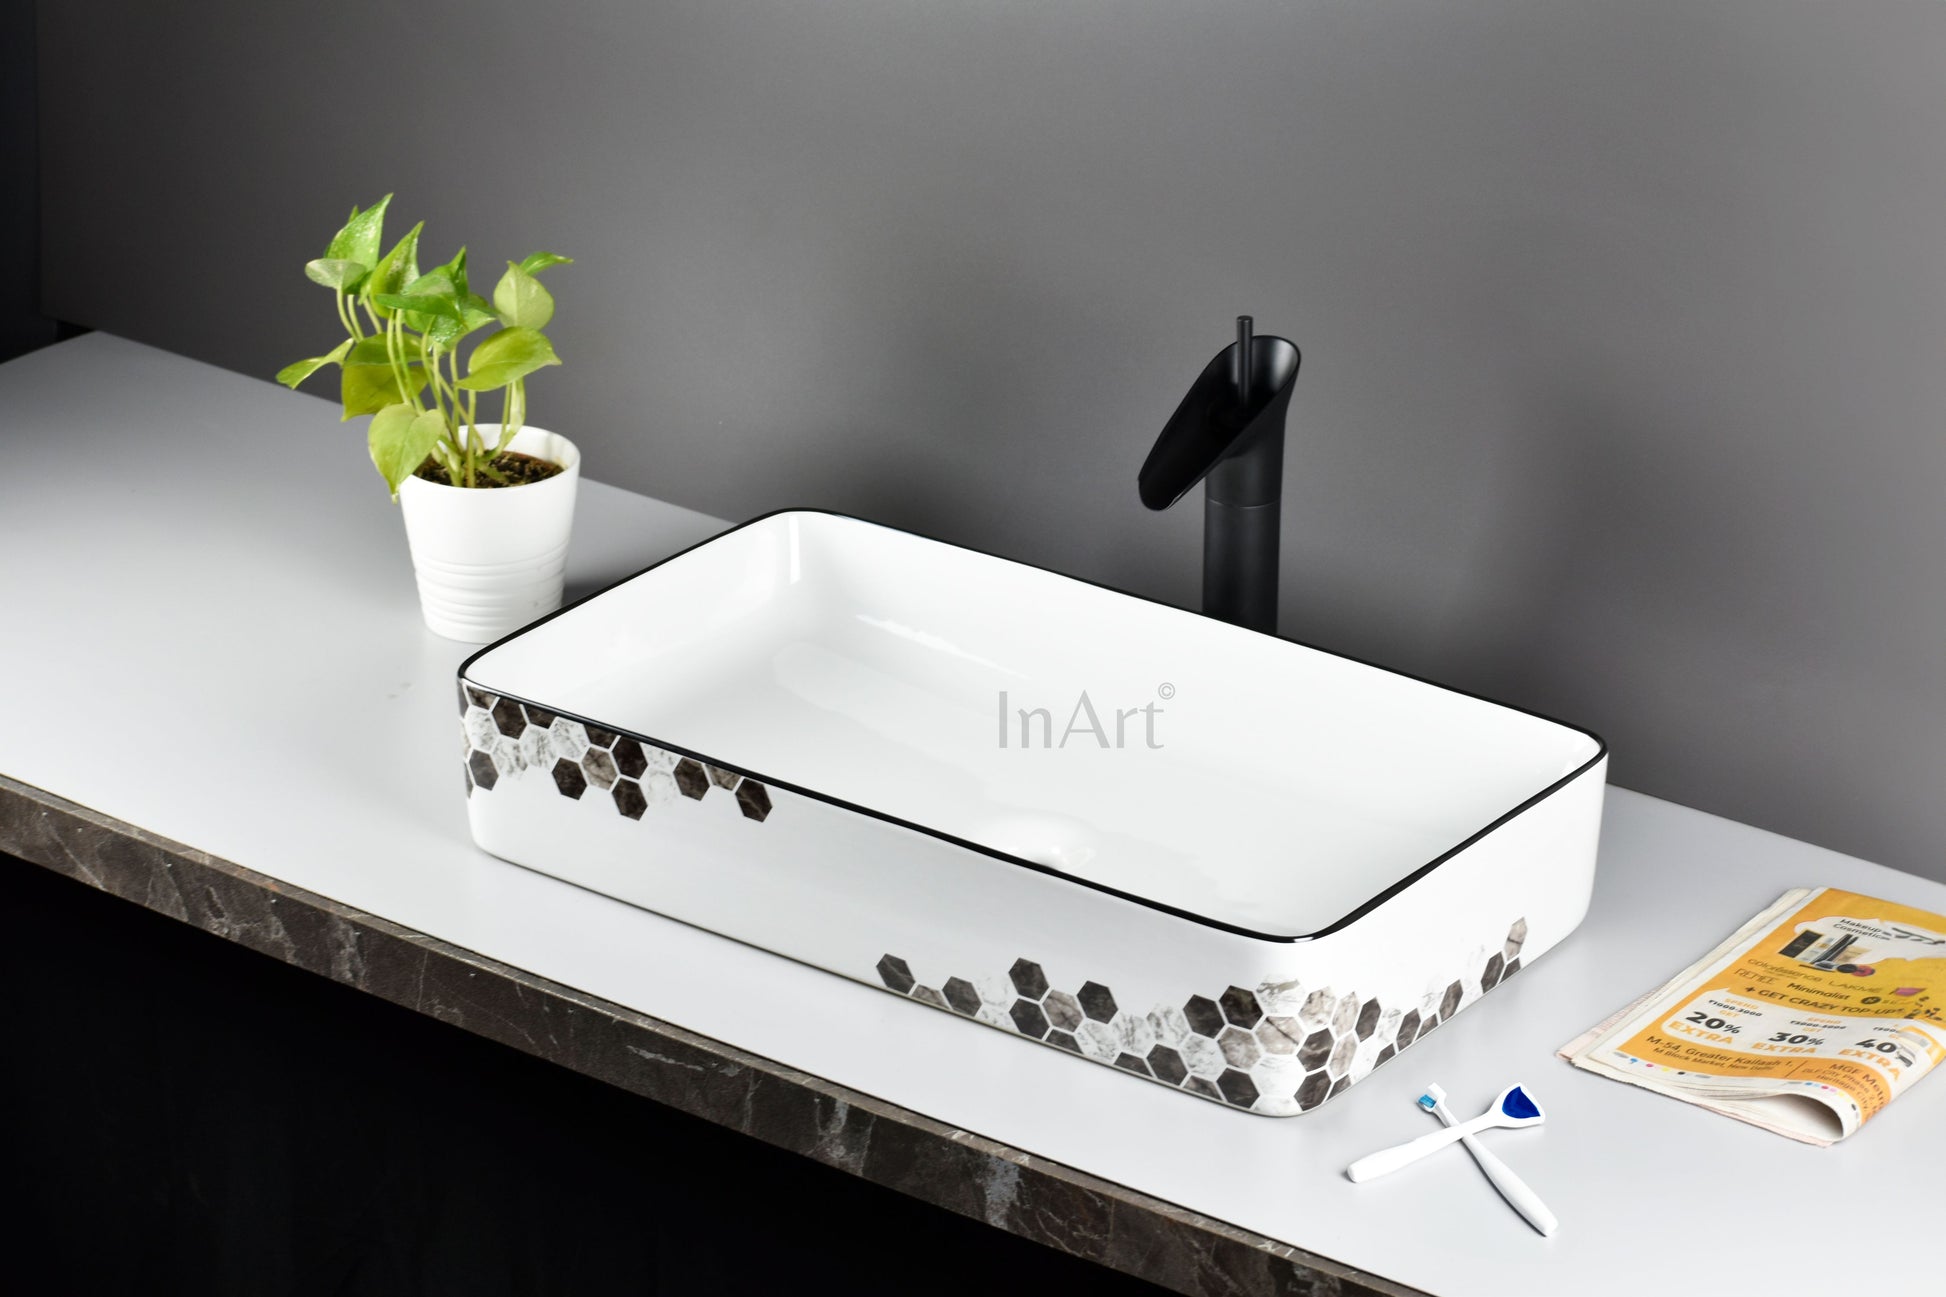 InArt Wash Basin Designer Counter Top Bathroom Sink - Vanity Wash Basin for Bathroom, Table Top Wash Basin 62 x 35 x 12 cm Black White DW270 - InArt-Studio